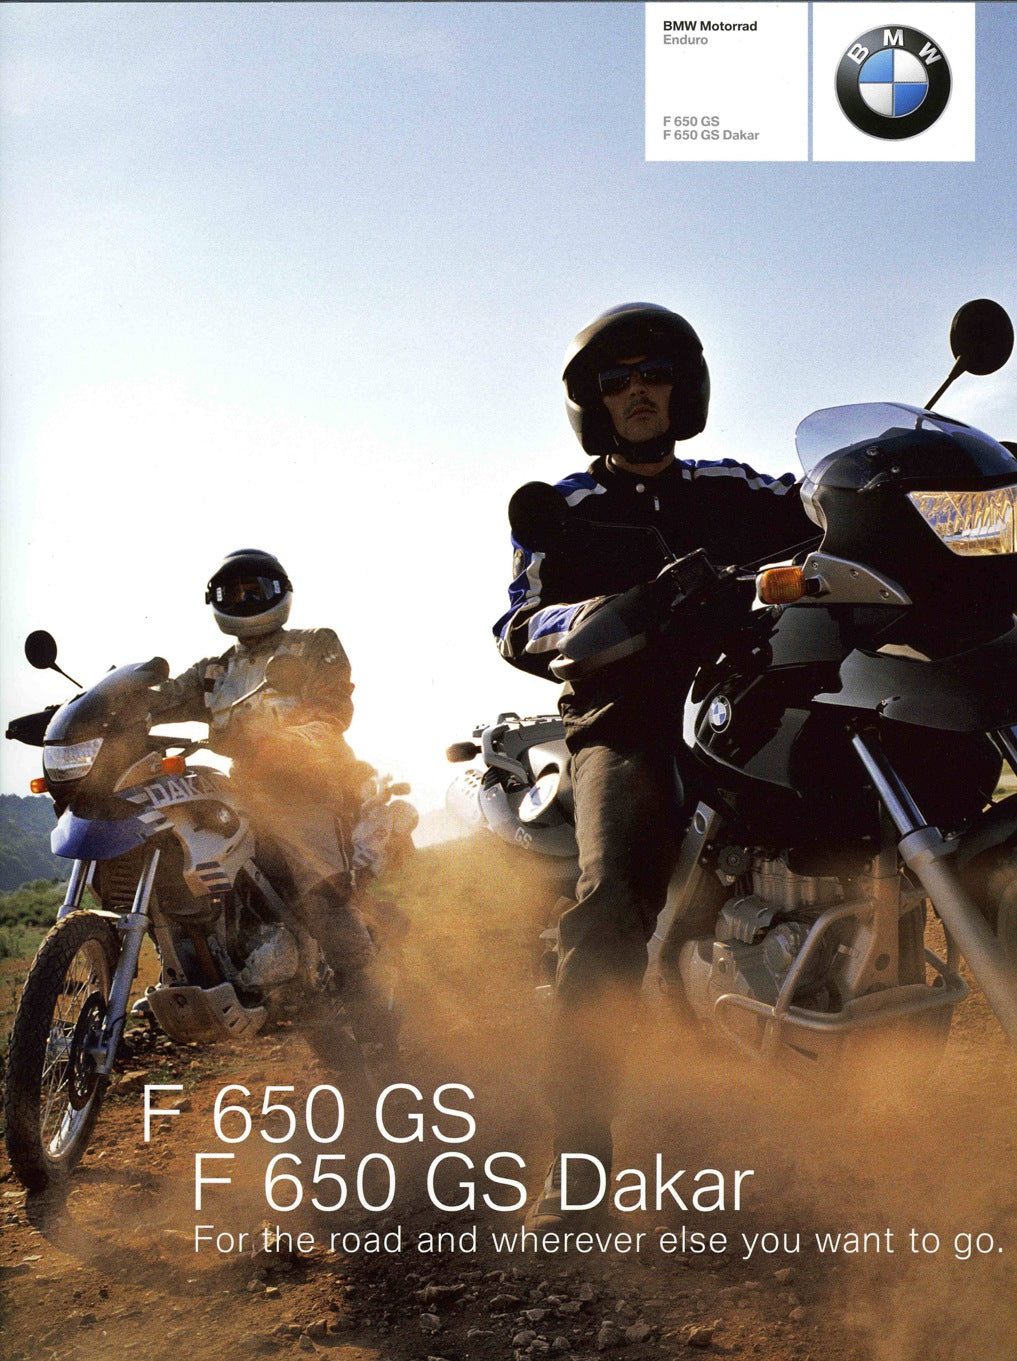 Brochure - BMW Motorrad Enduro F 650 GS F 650 GS Dakar - 2004 F650GS Dakar Brochure